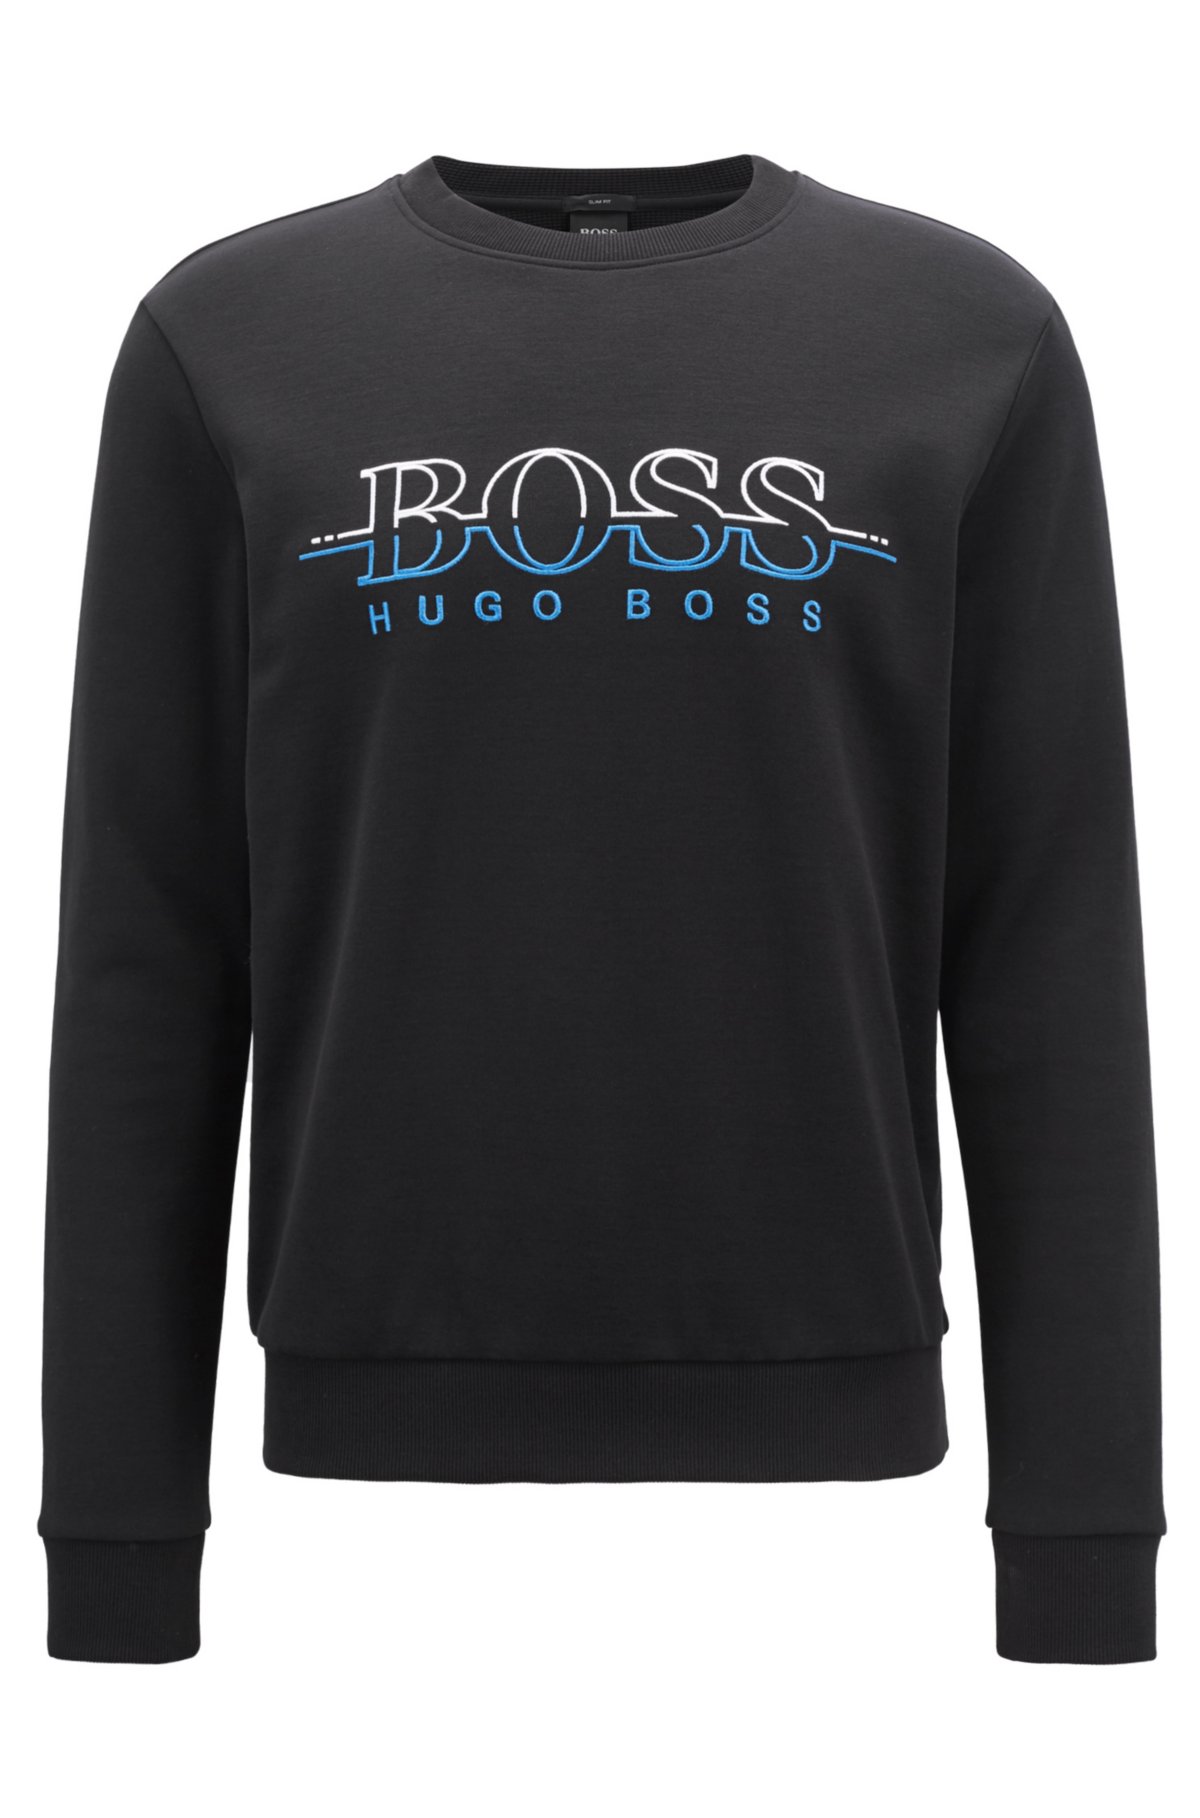 BOSS - Crew-neck logo sweatshirt in a cotton blend